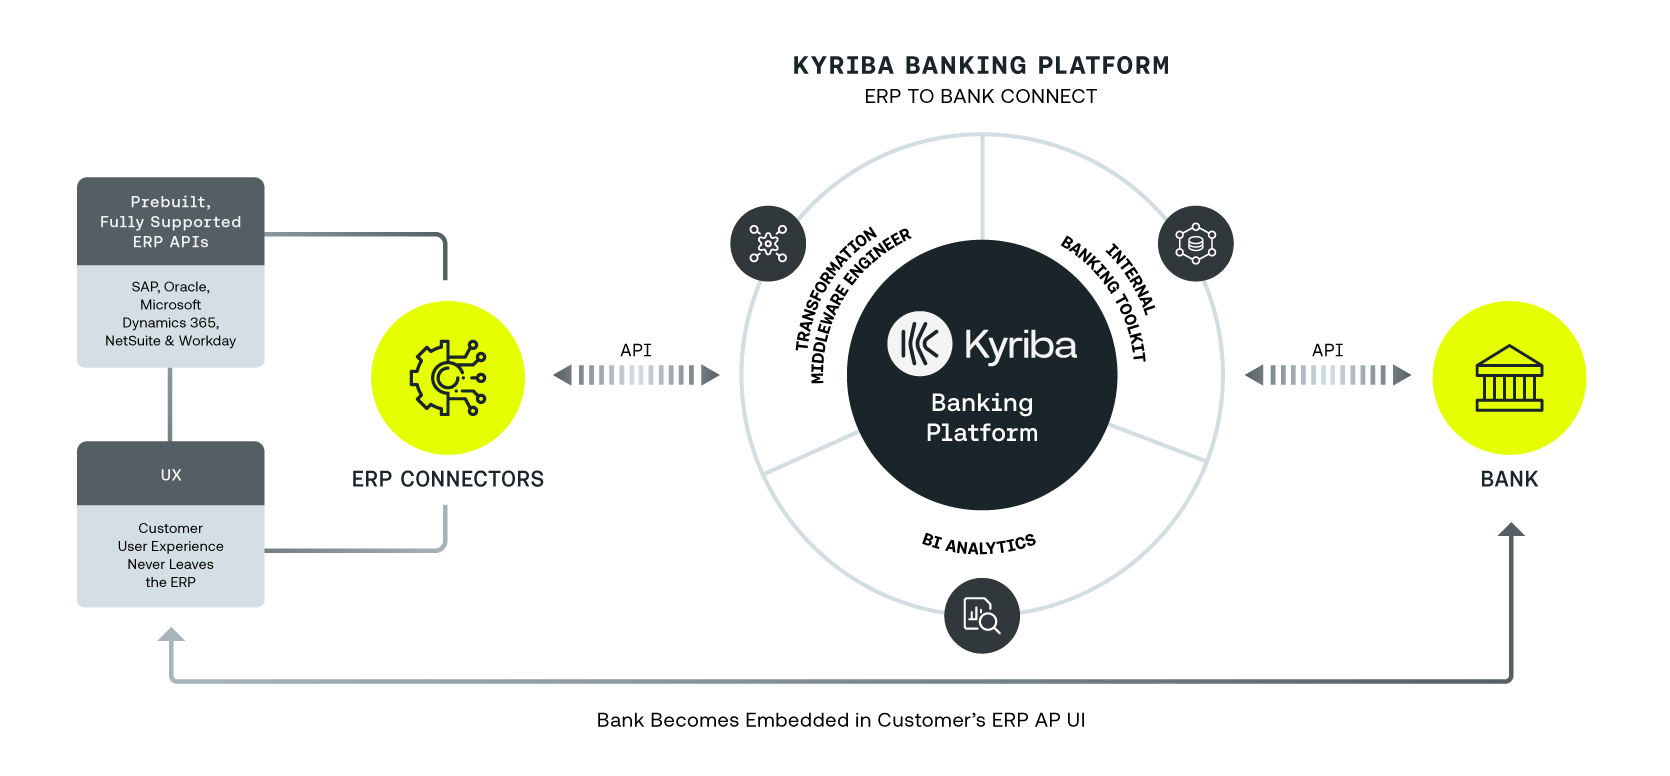 Kyriba Bank Connectivity as a Service Platform